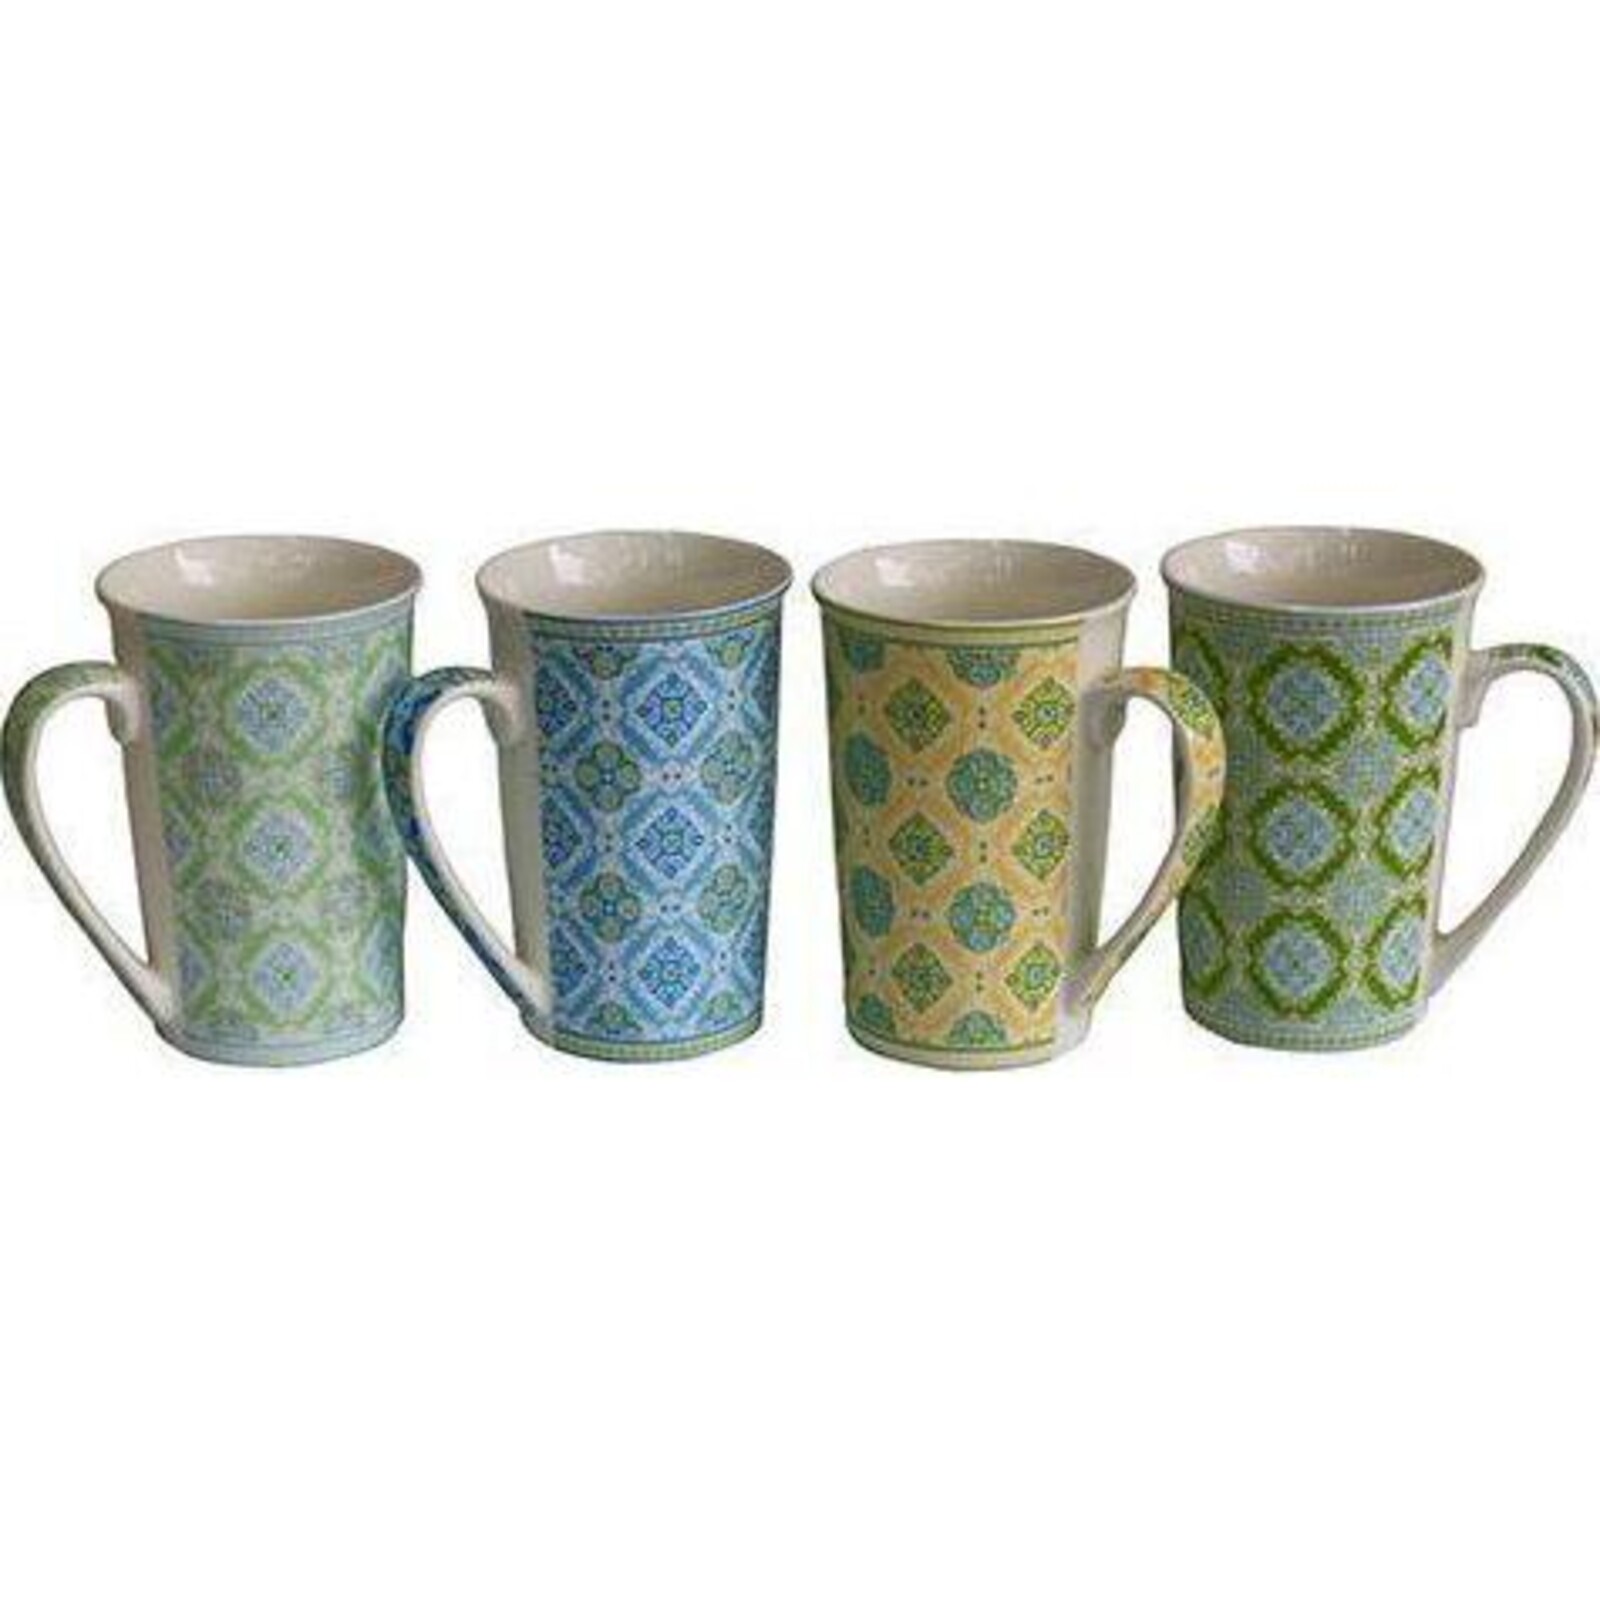 Coffee Mug Soft pattern 4 Asst